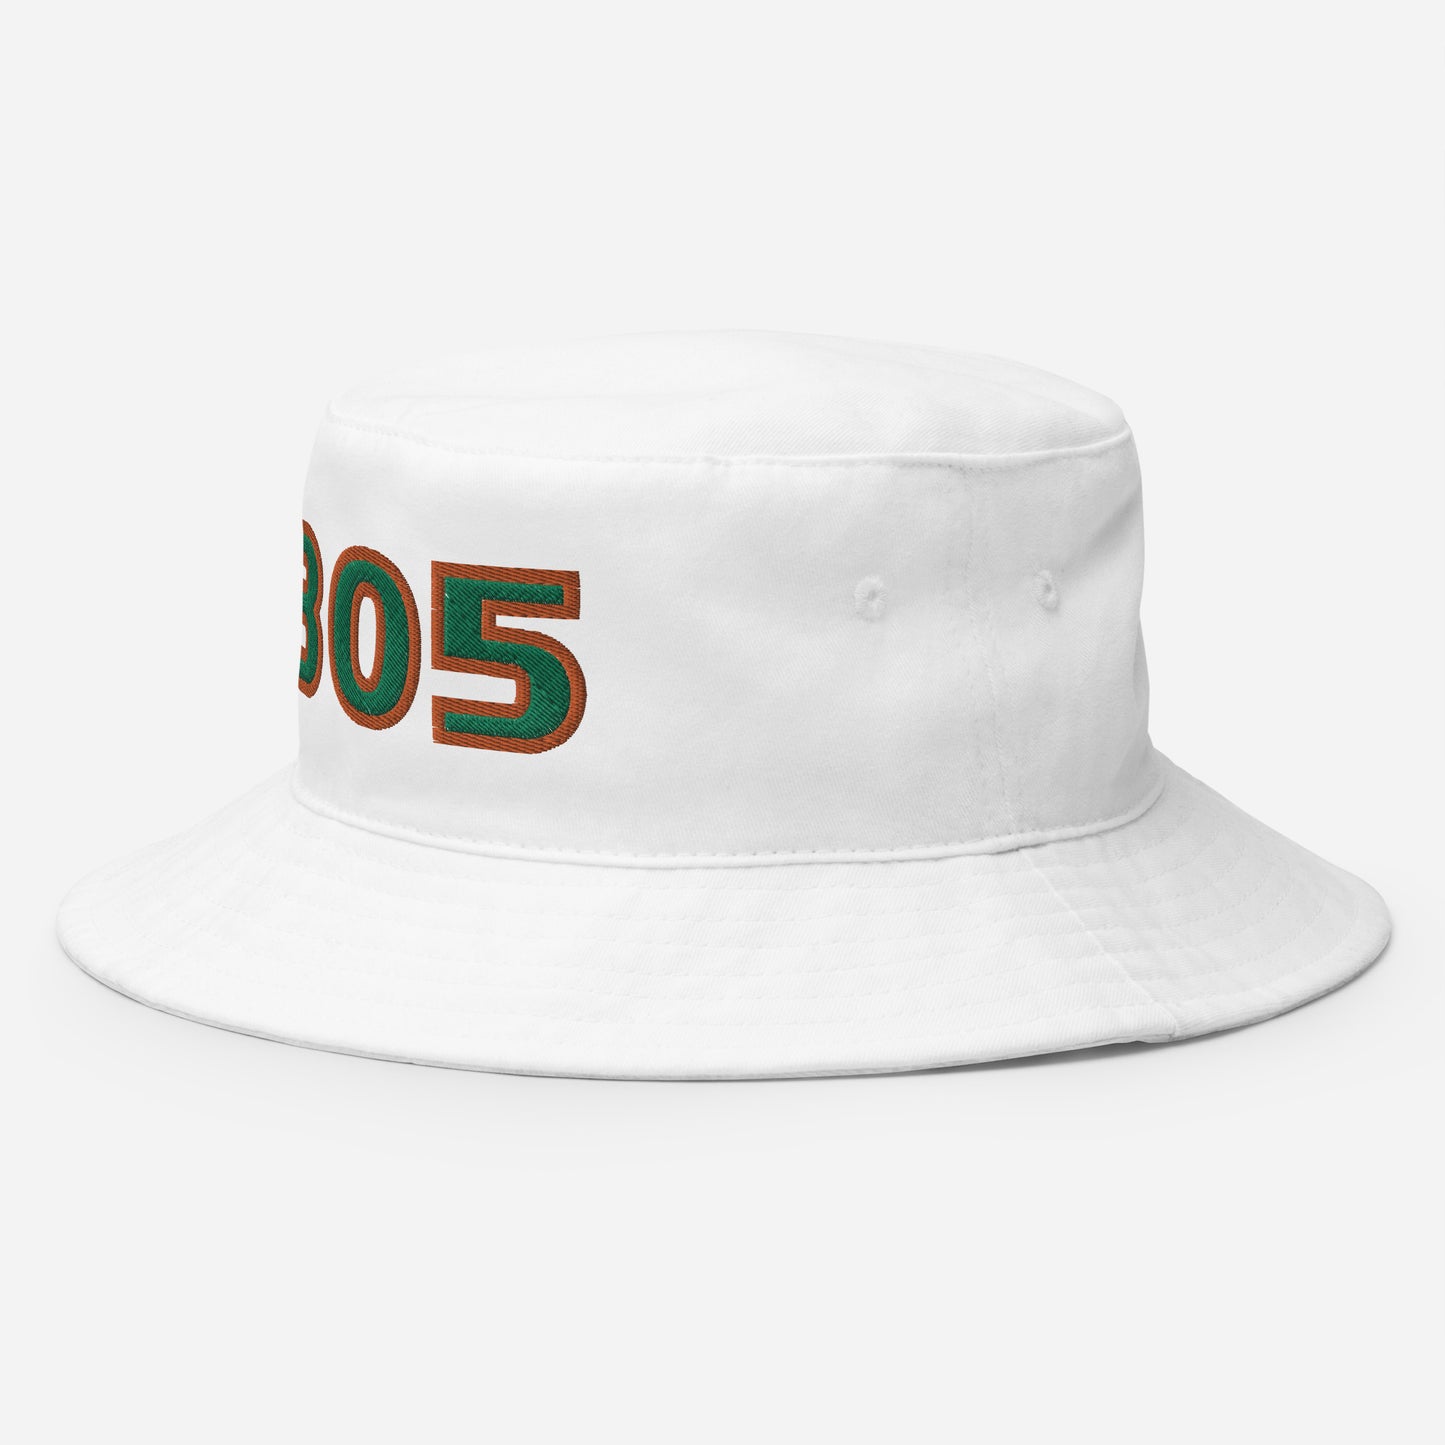 Miami Bucket Hat: Hurricanes 305